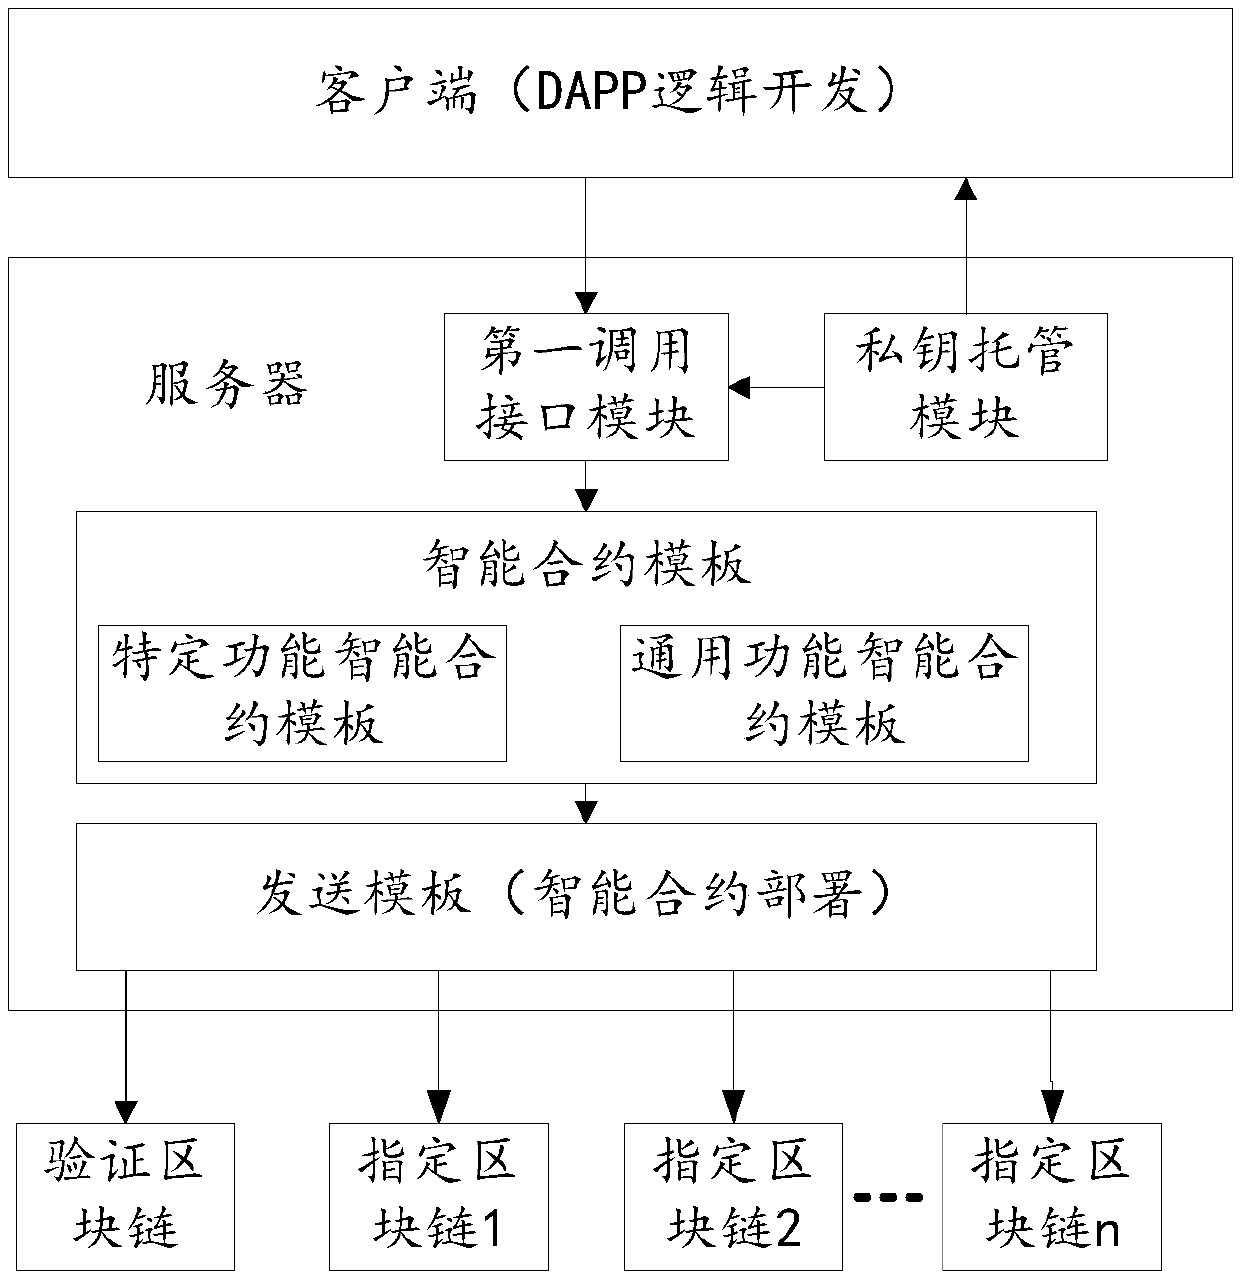 A DAPP development method and device